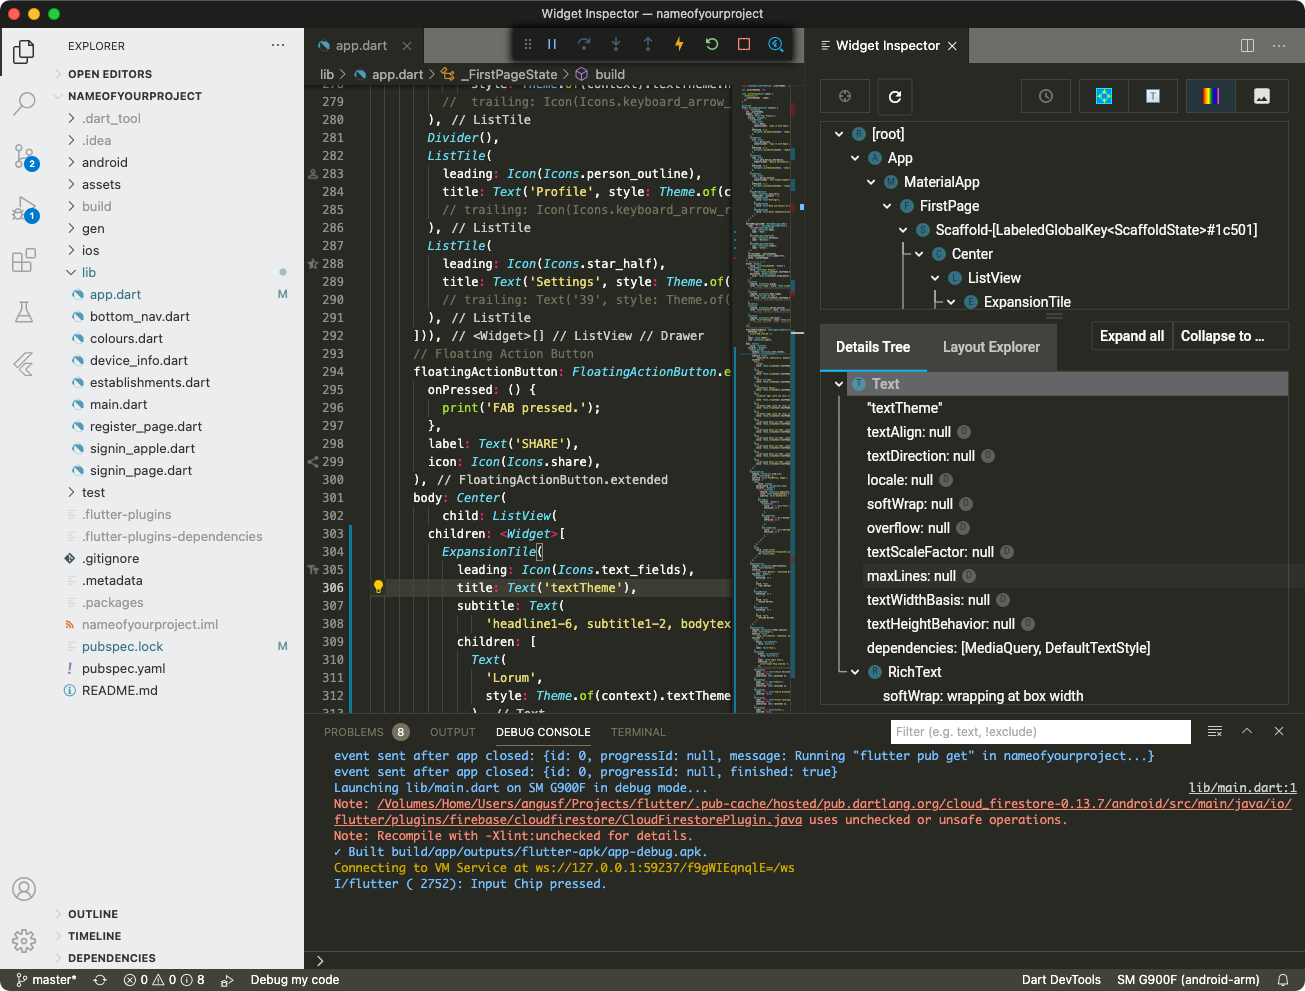 Flutter project with tje Flutter DevTools open - screenshot